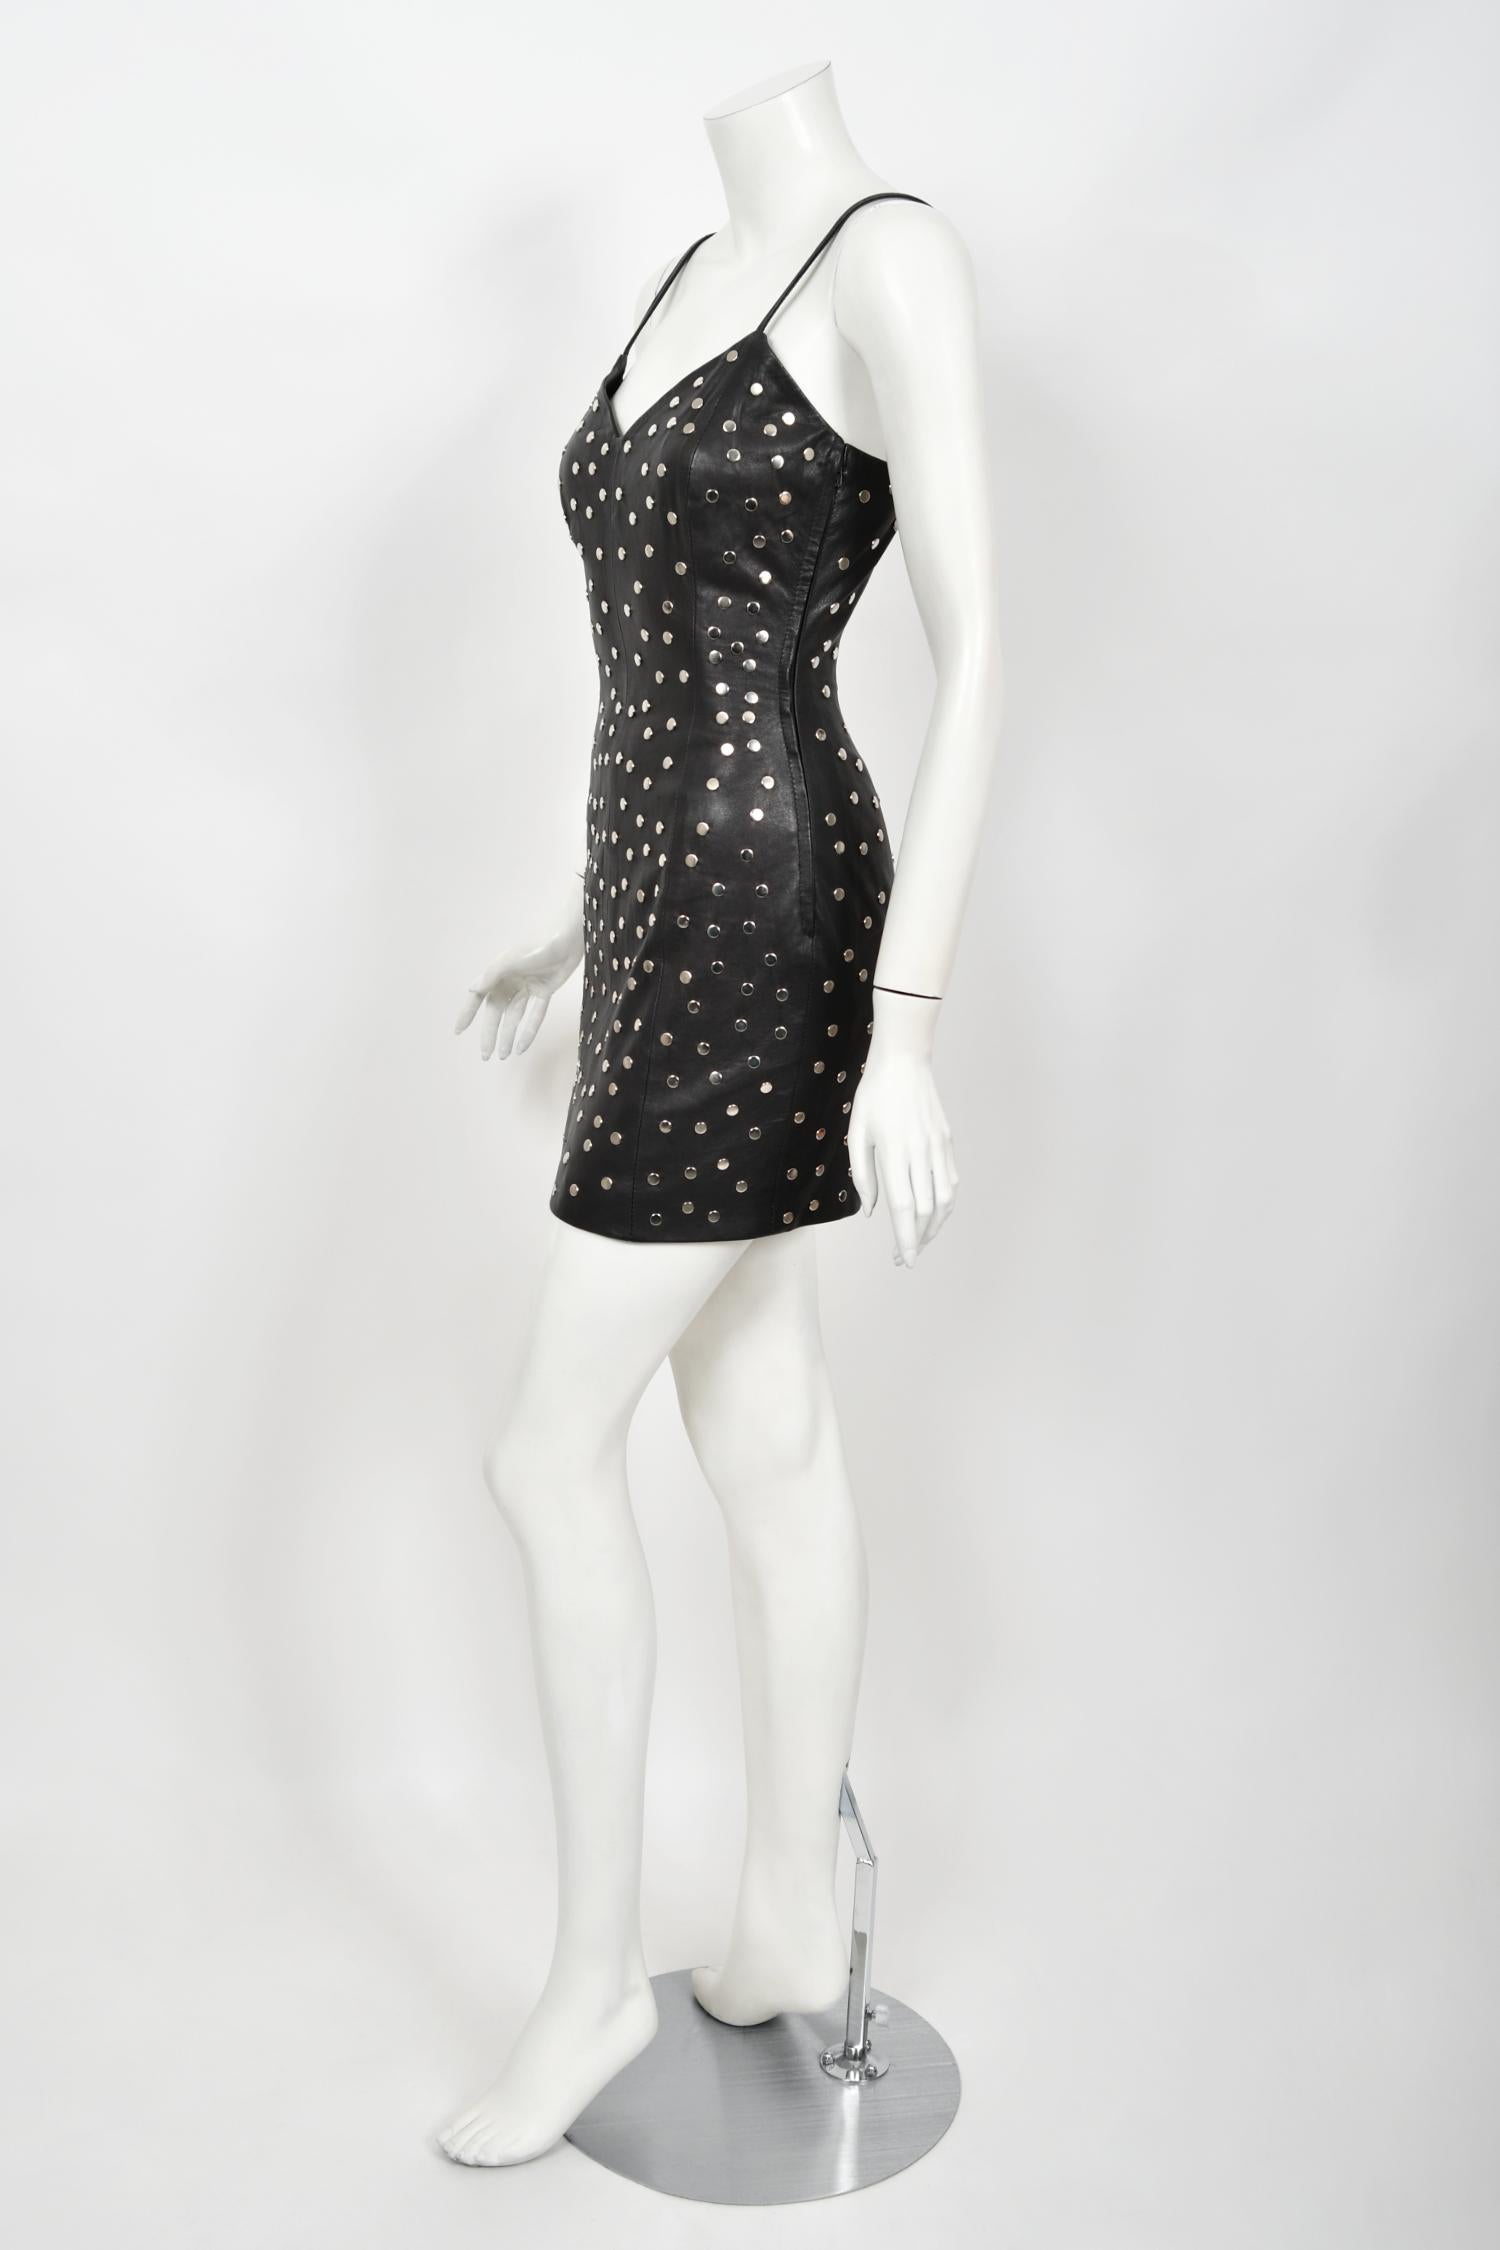 Vintage 1991 Dolce & Gabbana Documented Runway Studded Black Leather Mini Dress For Sale 4